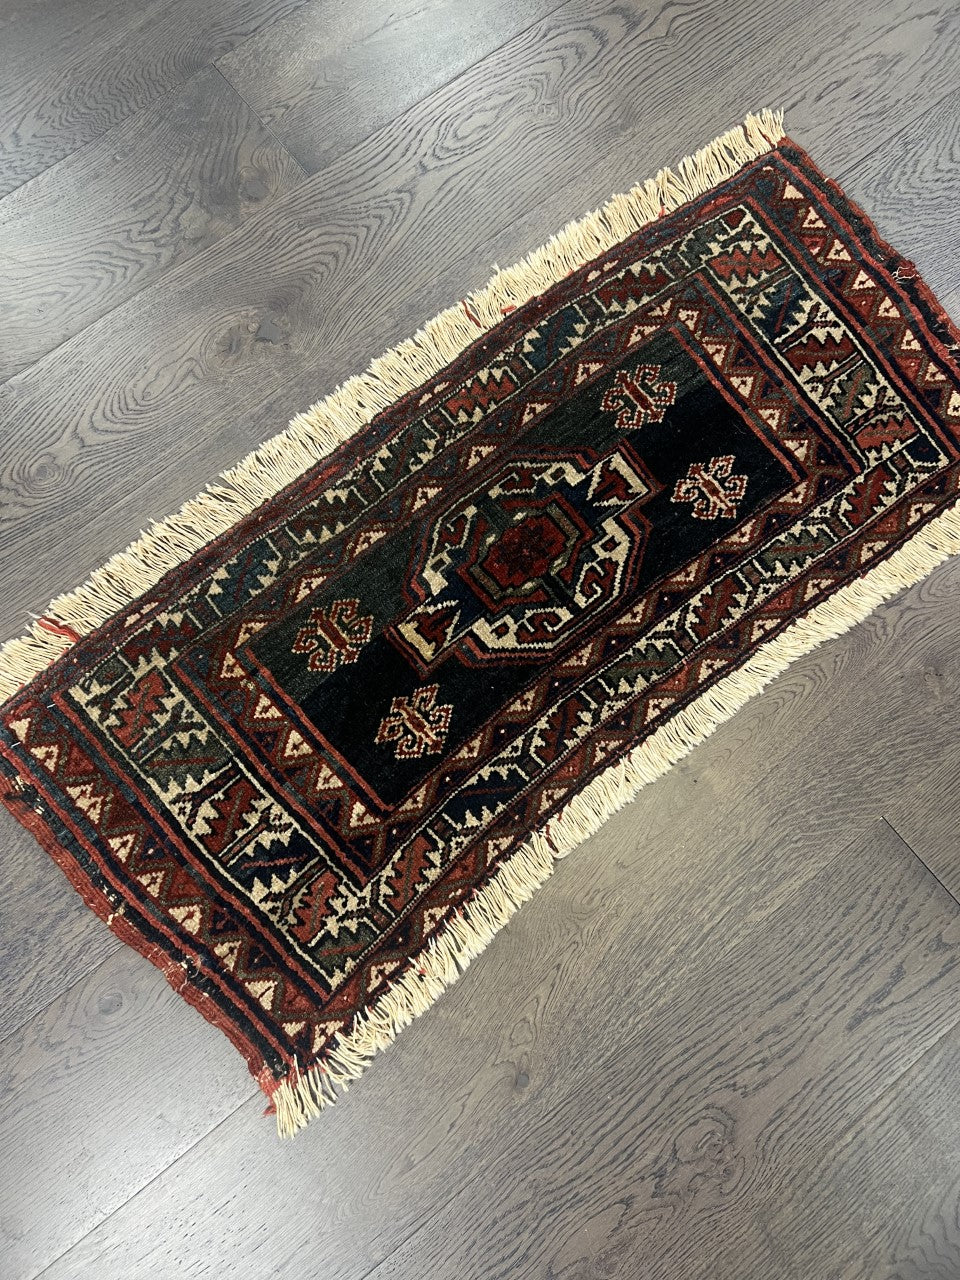 Amazing old antique Veramin Mafrash rug